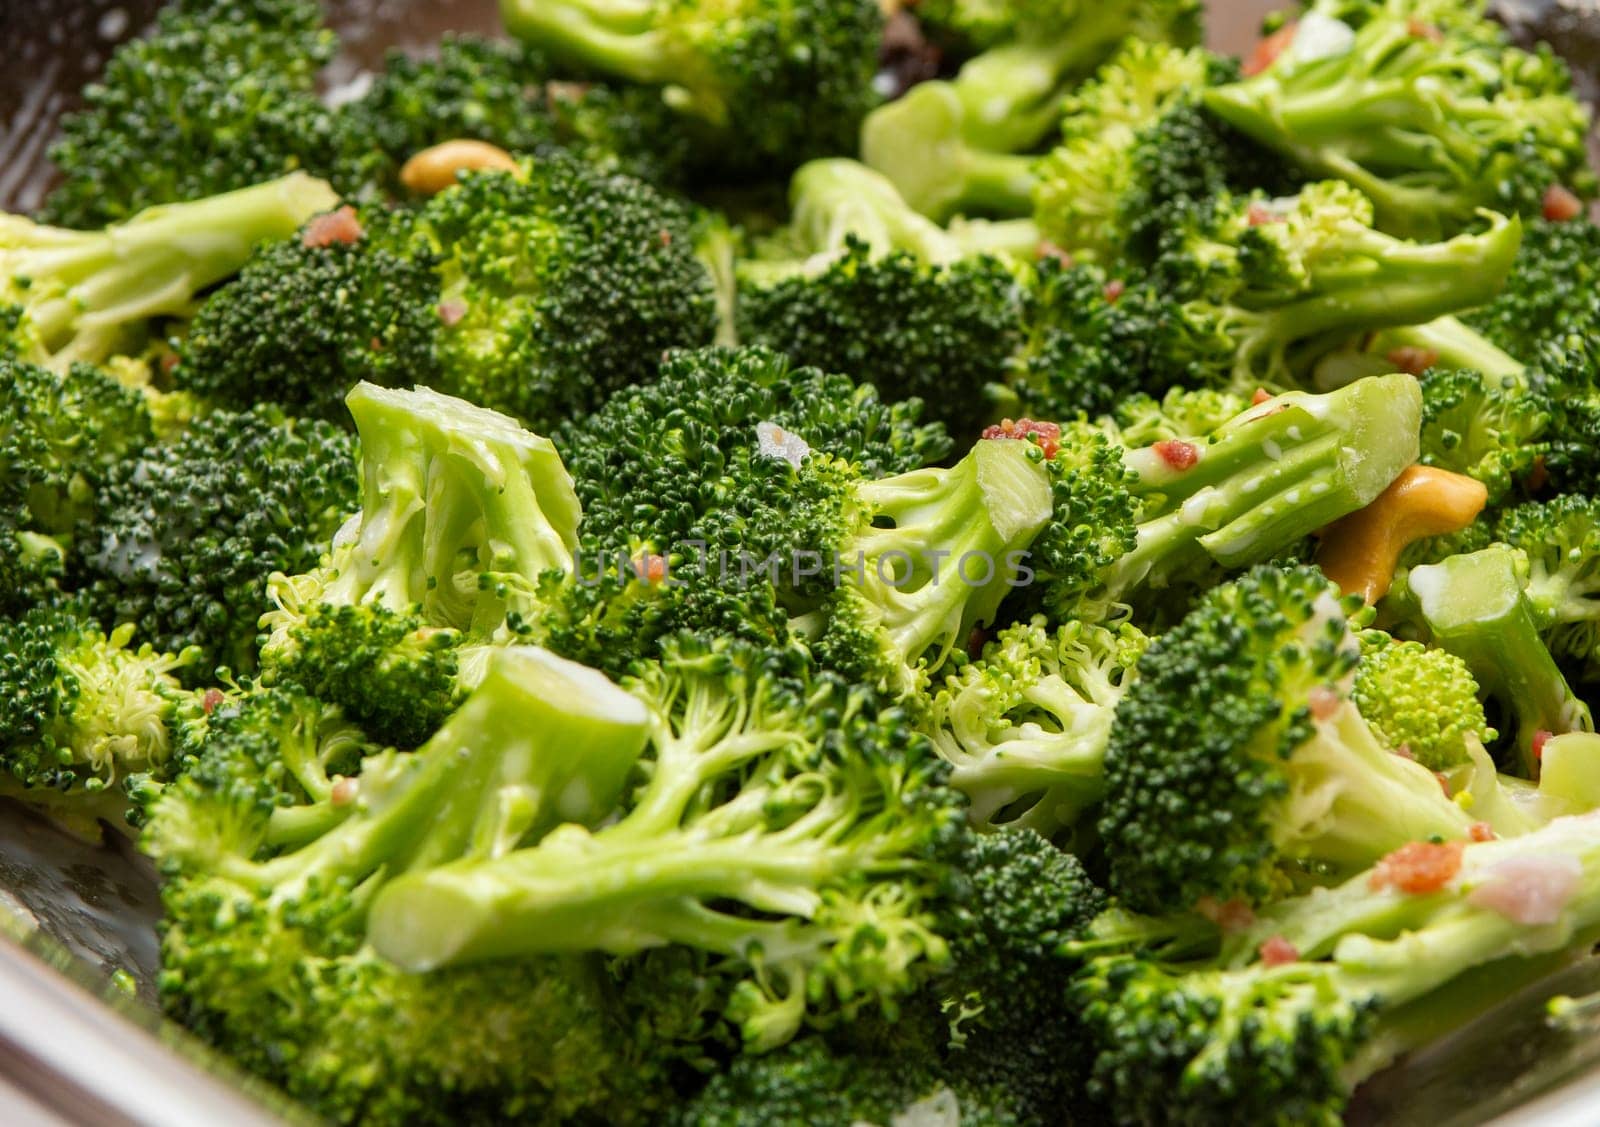 A simple broccoli salad as a side dish